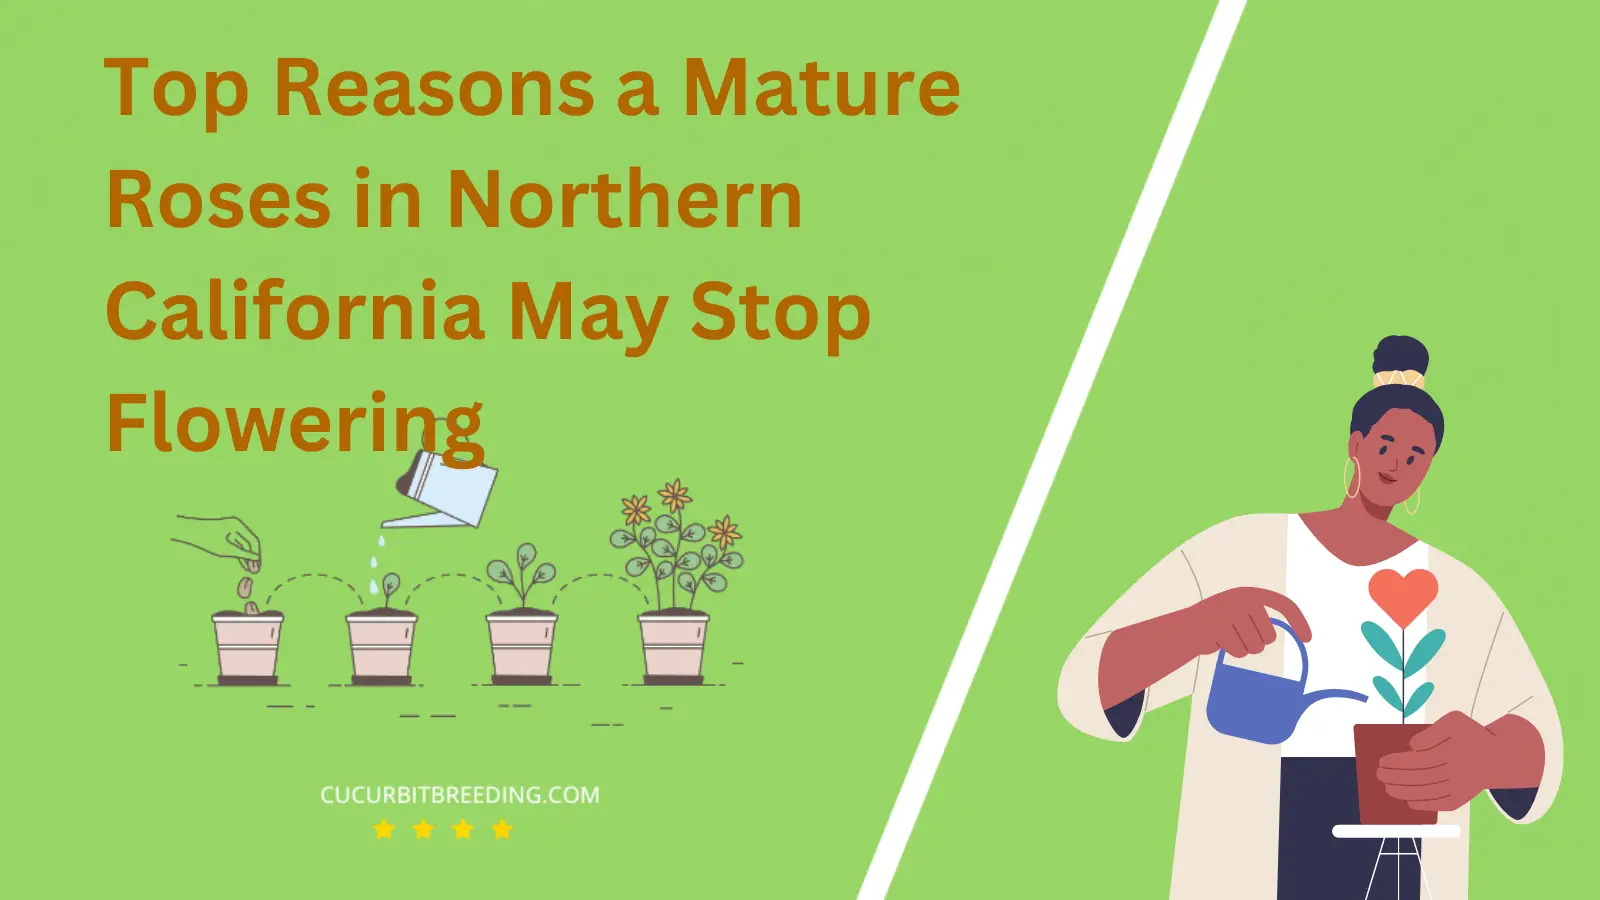 Top Reasons a Mature Roses in Northern California May Stop Flowering